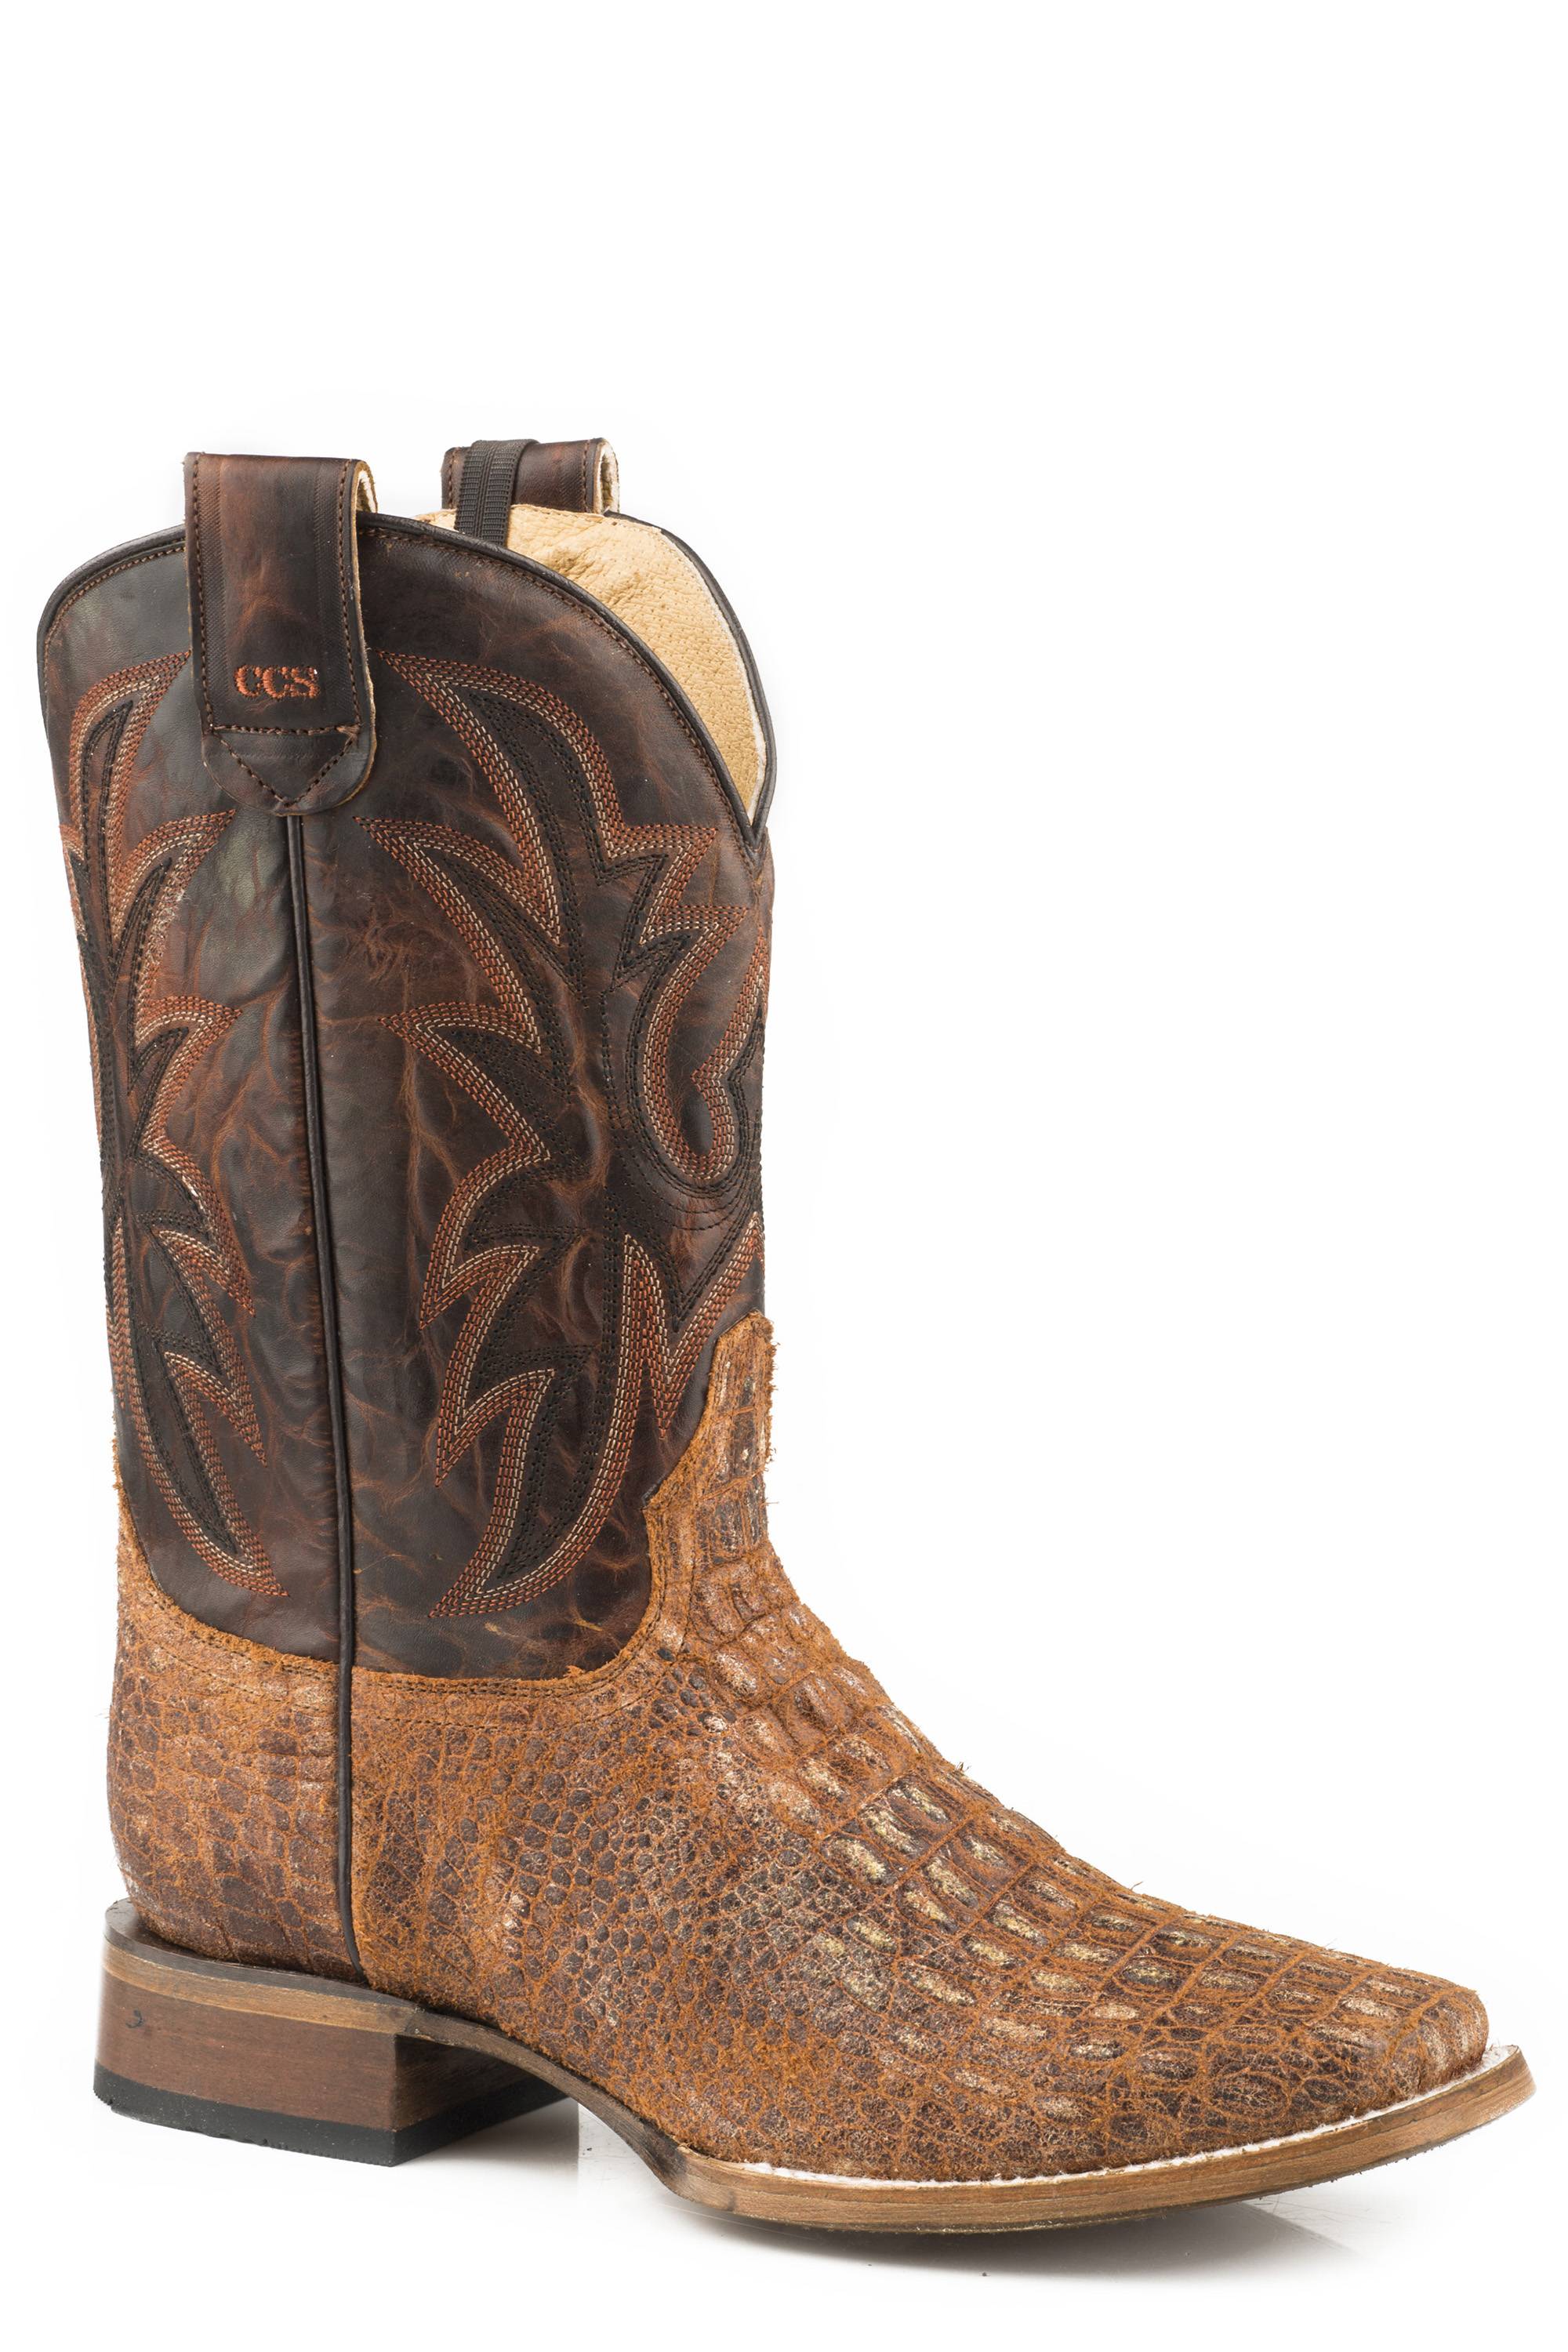 cowboy boots flat heel